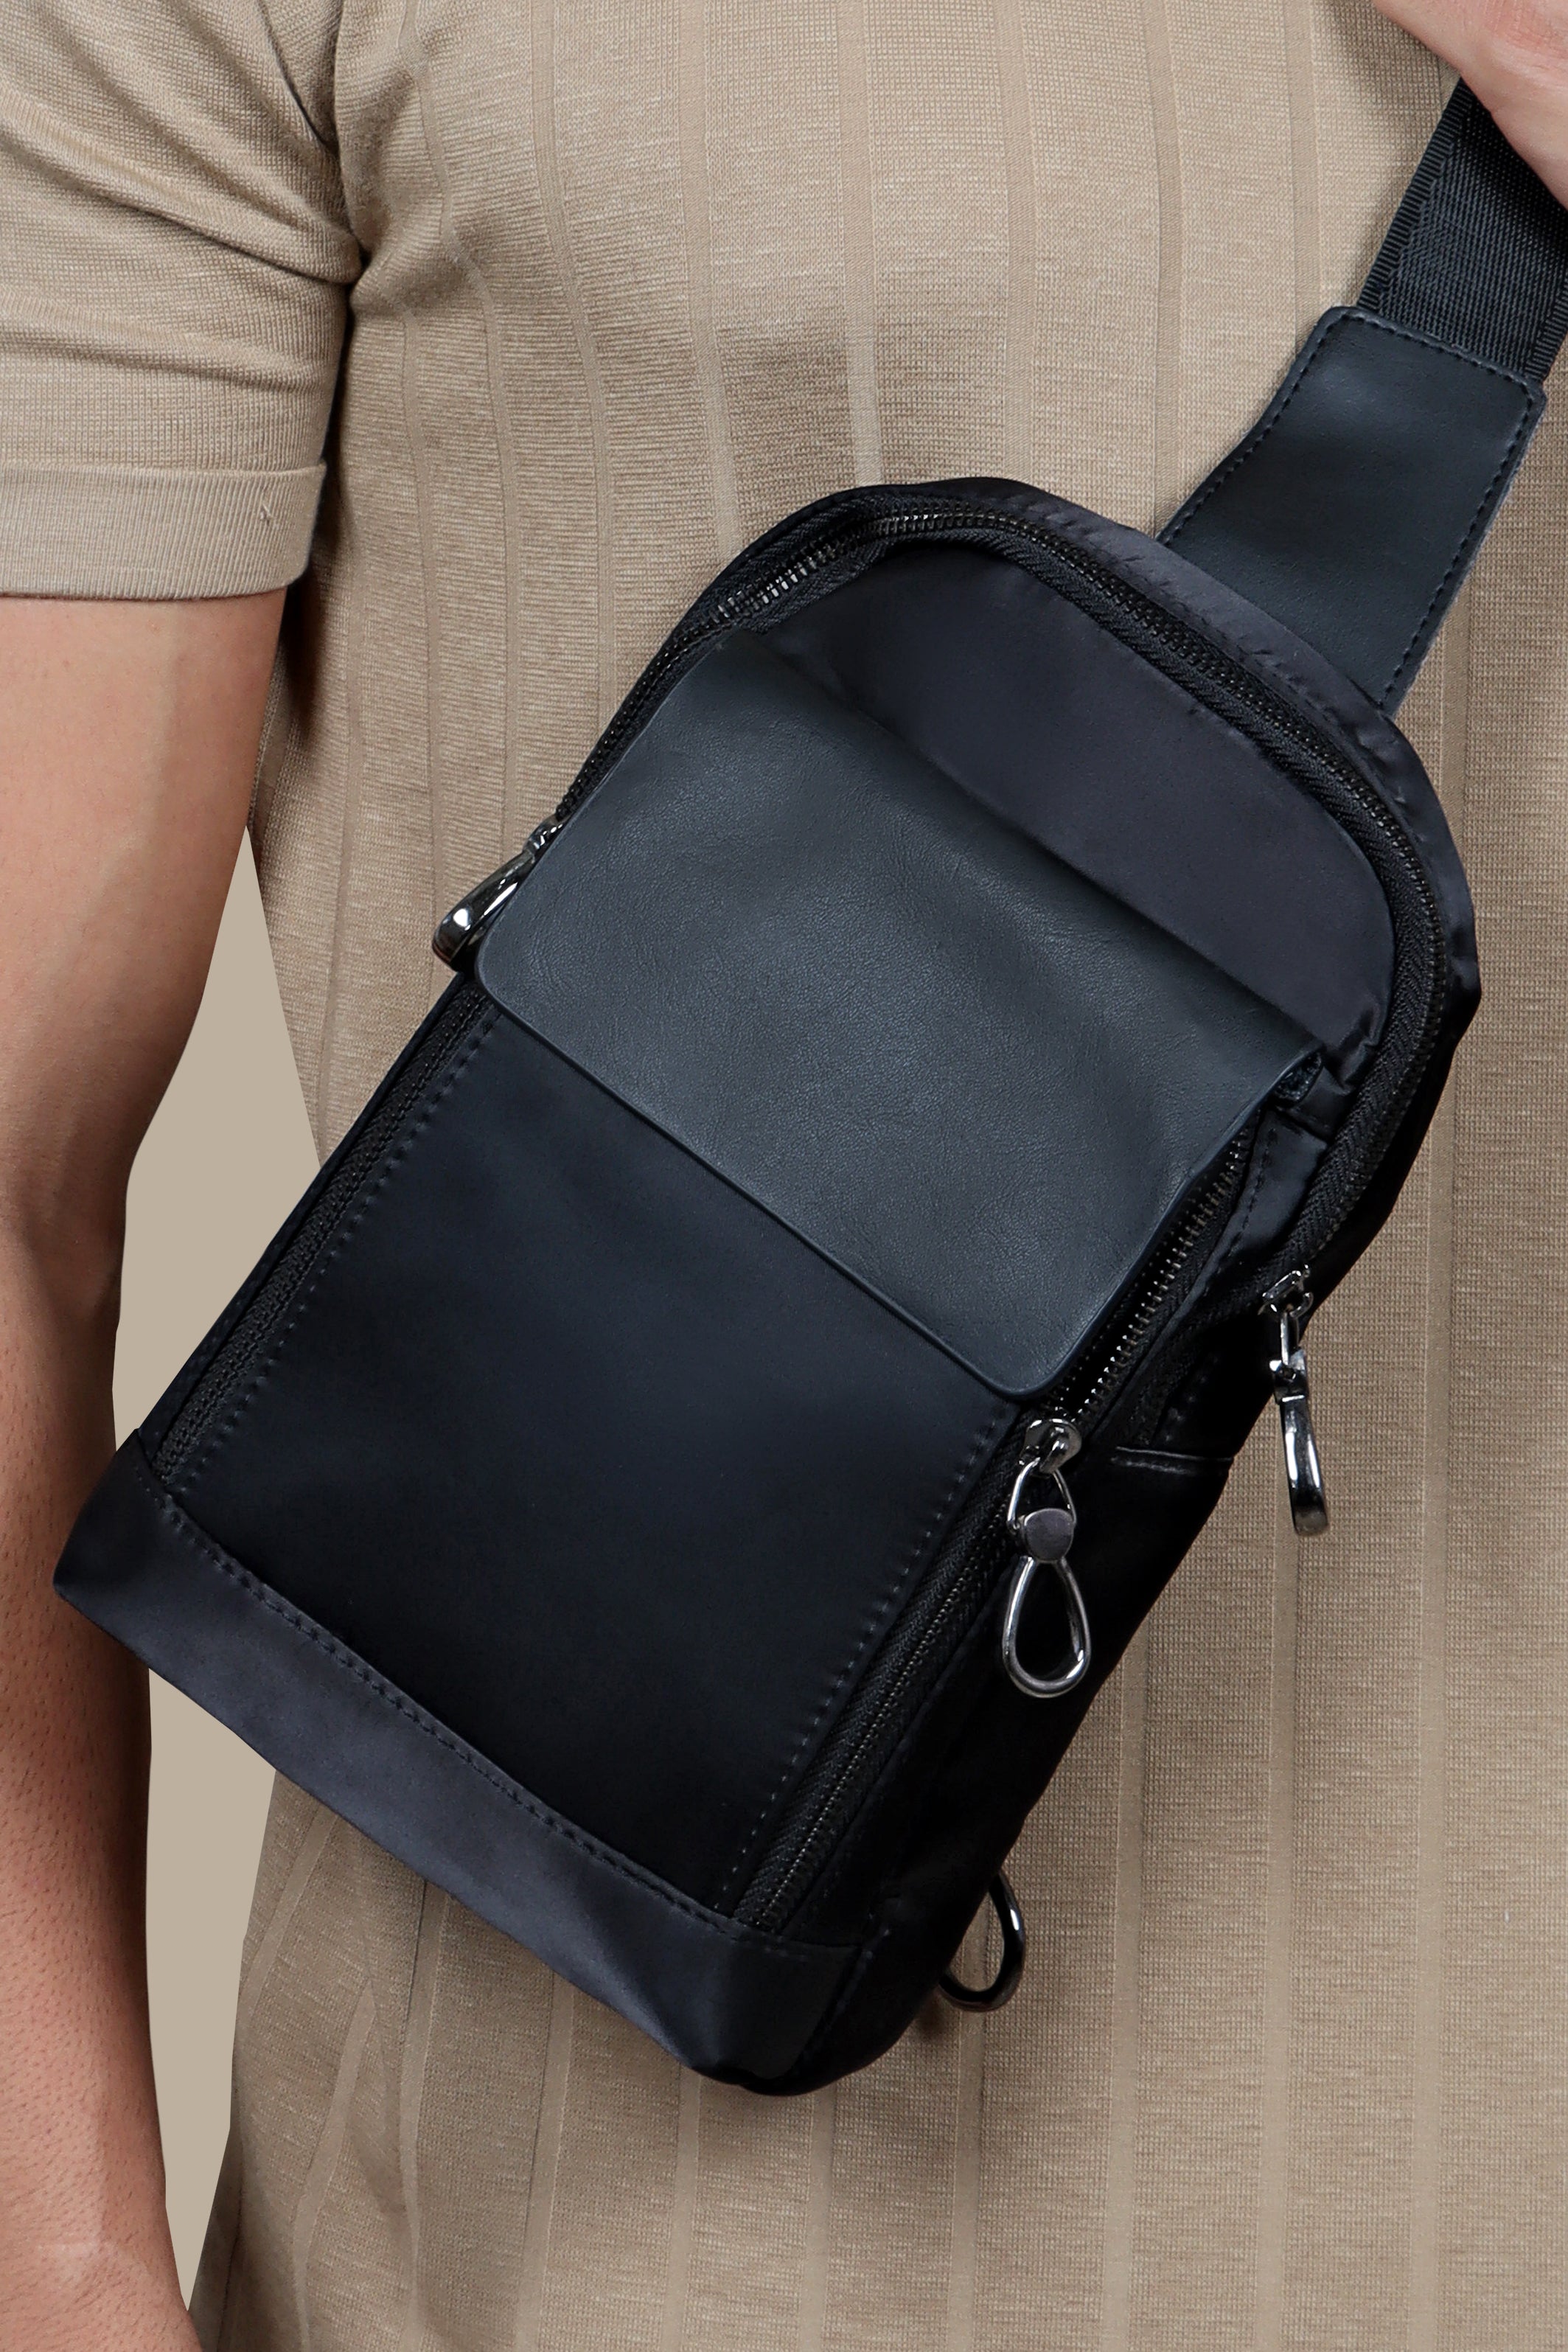 Urban Luxe: Half Leather Black Cross Bag